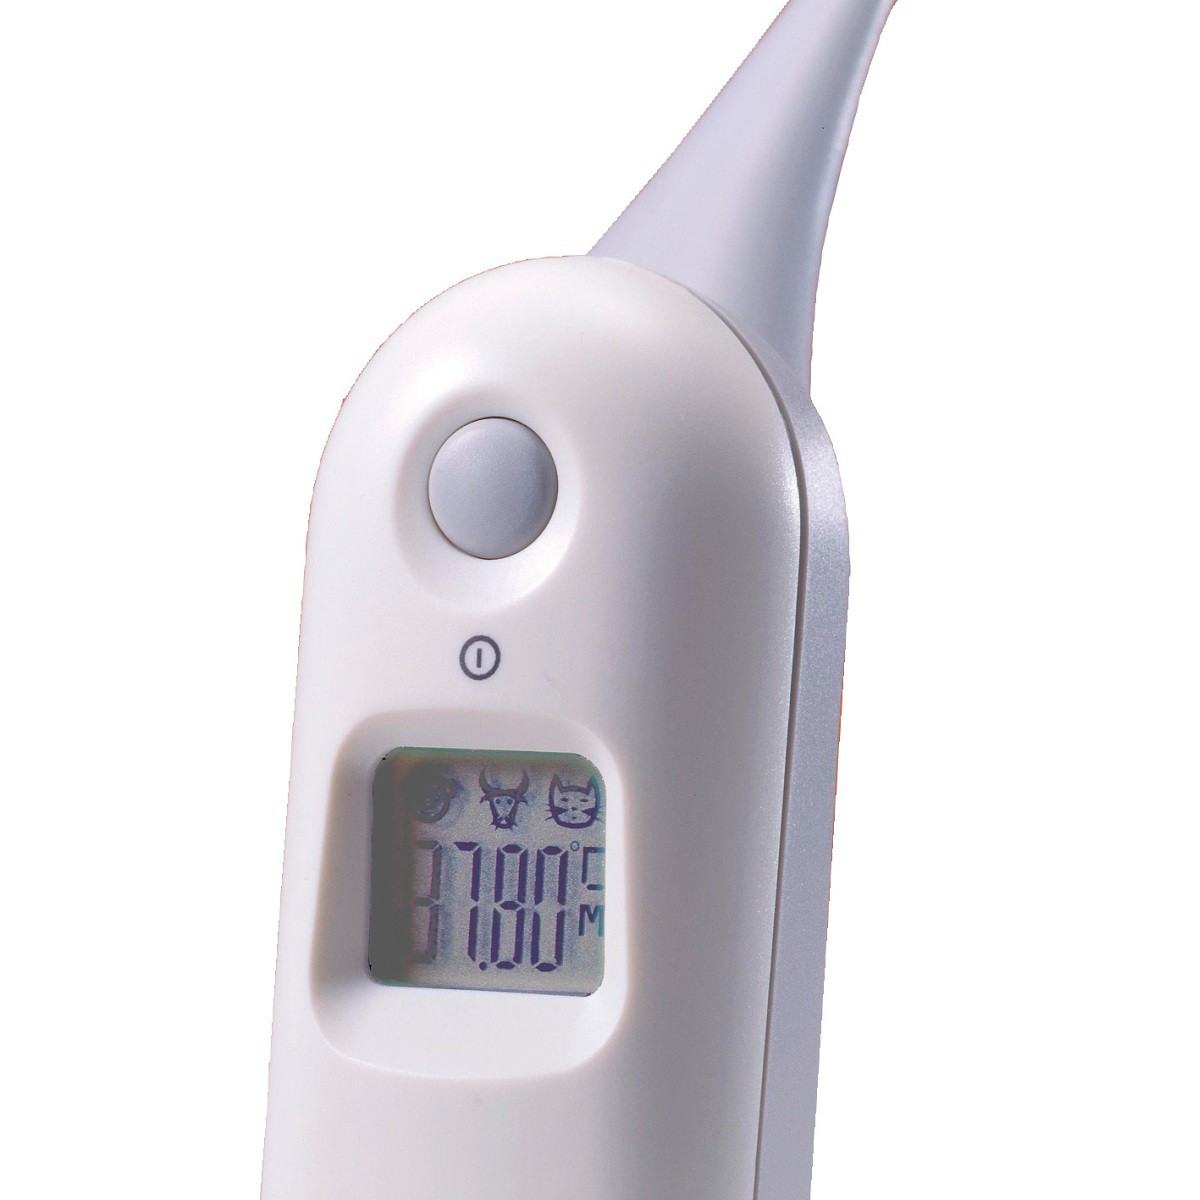 Klinisk termometer Toptemp elektronisk djur rektal termometer